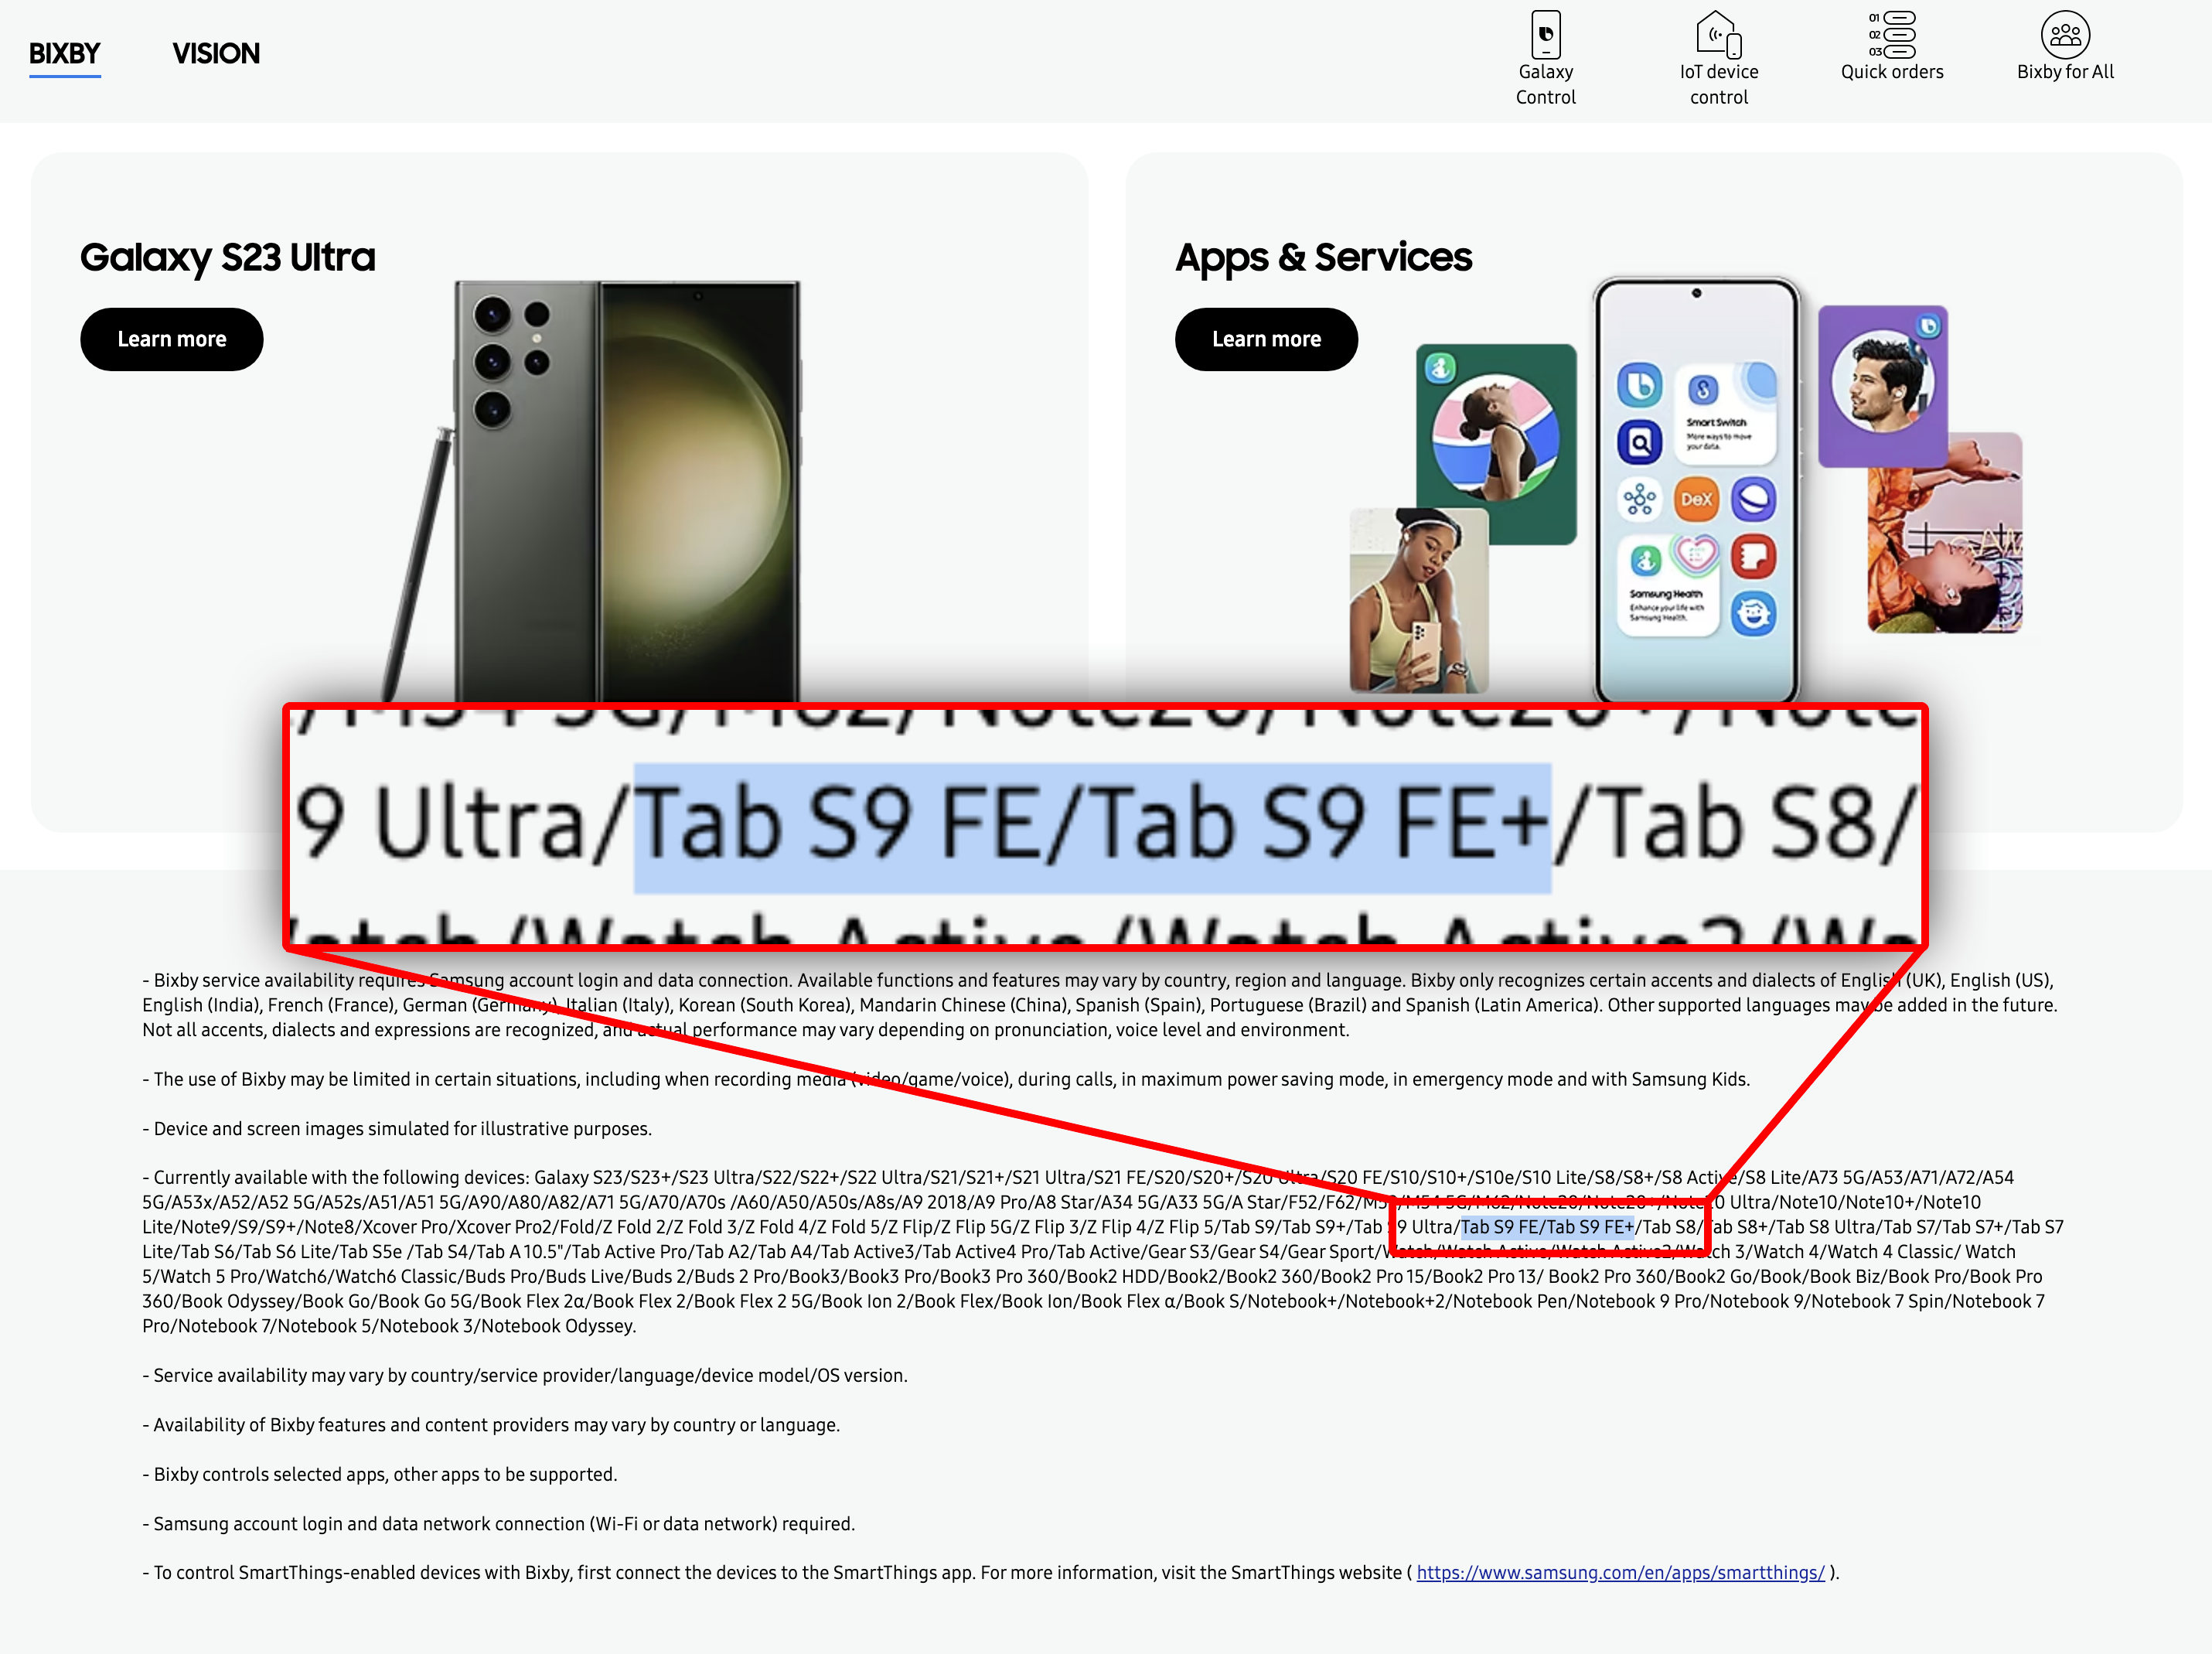 Samsung が｢Galaxy Tab S9 FE / FE+｣の名称を誤って記載